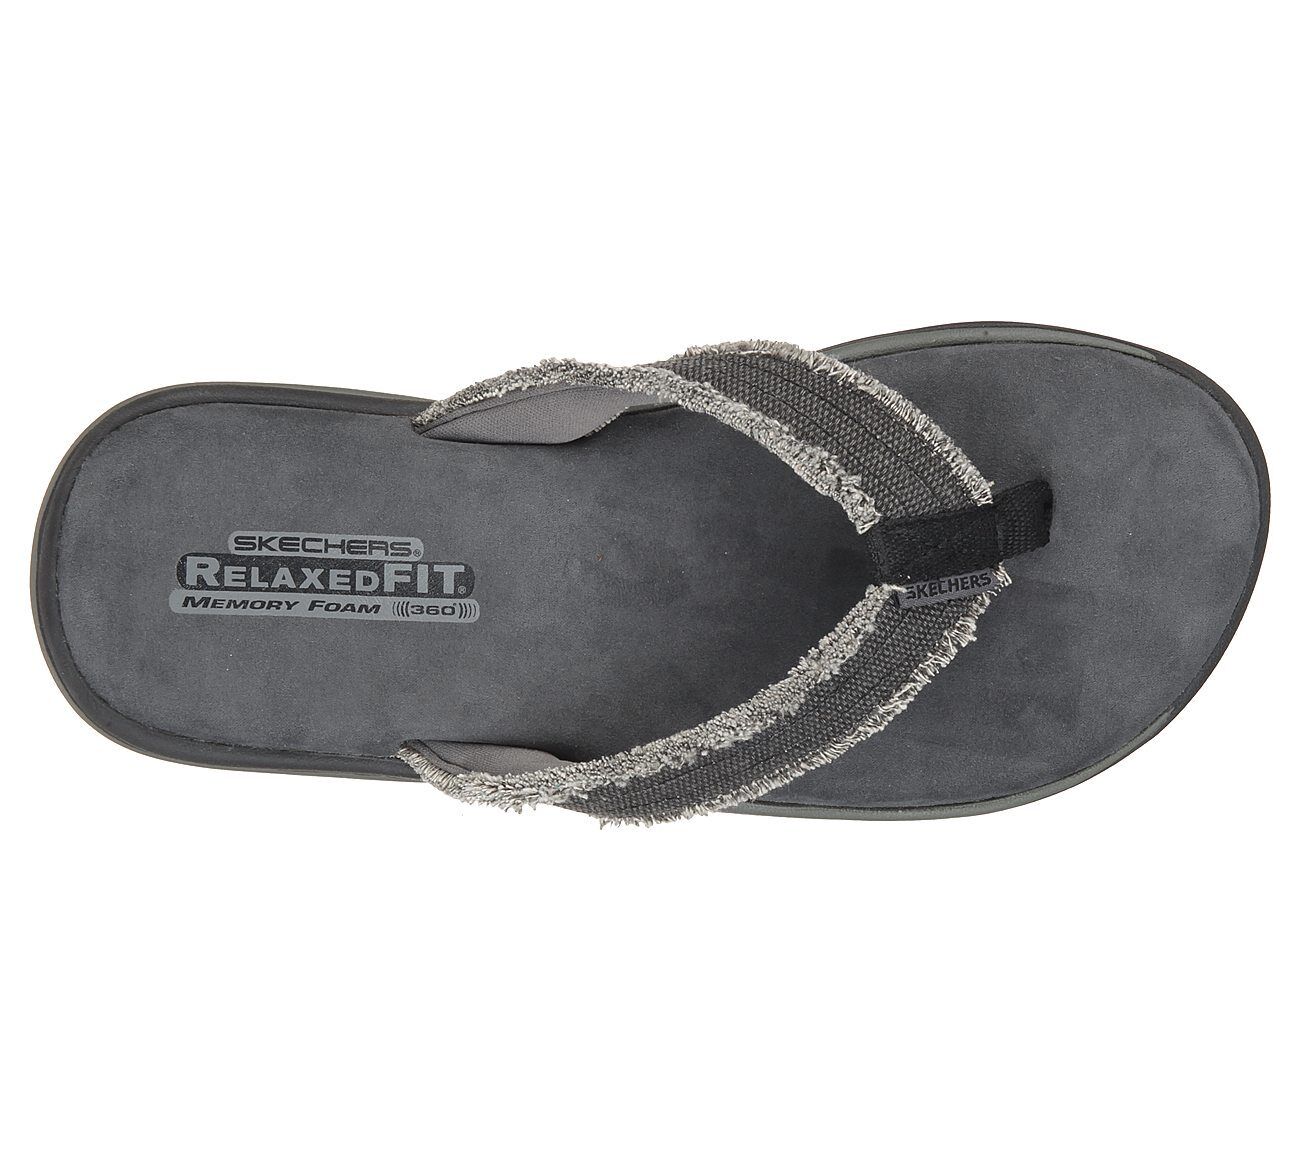 Men's Skechers Relaxed Fit: Supreme - Bosnia Sandals, 64152 /BLK Multiple Sizes Black